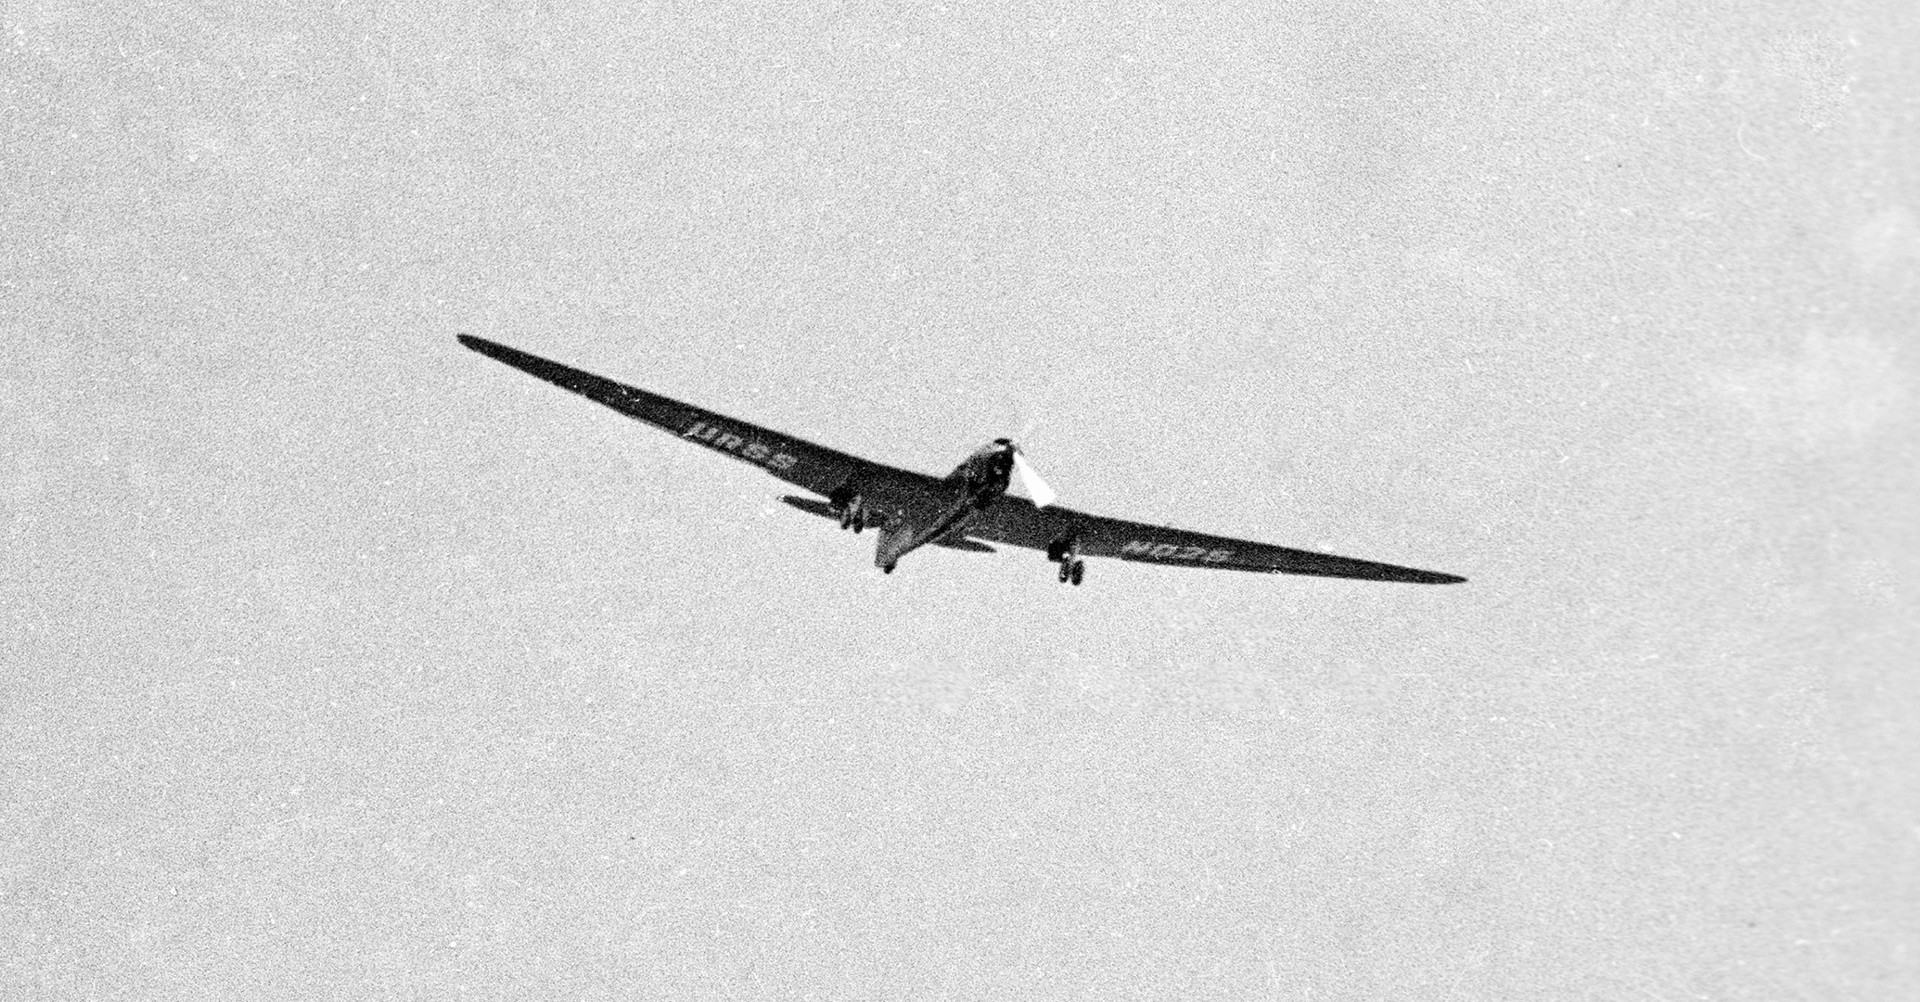 ANT-25 im Flug